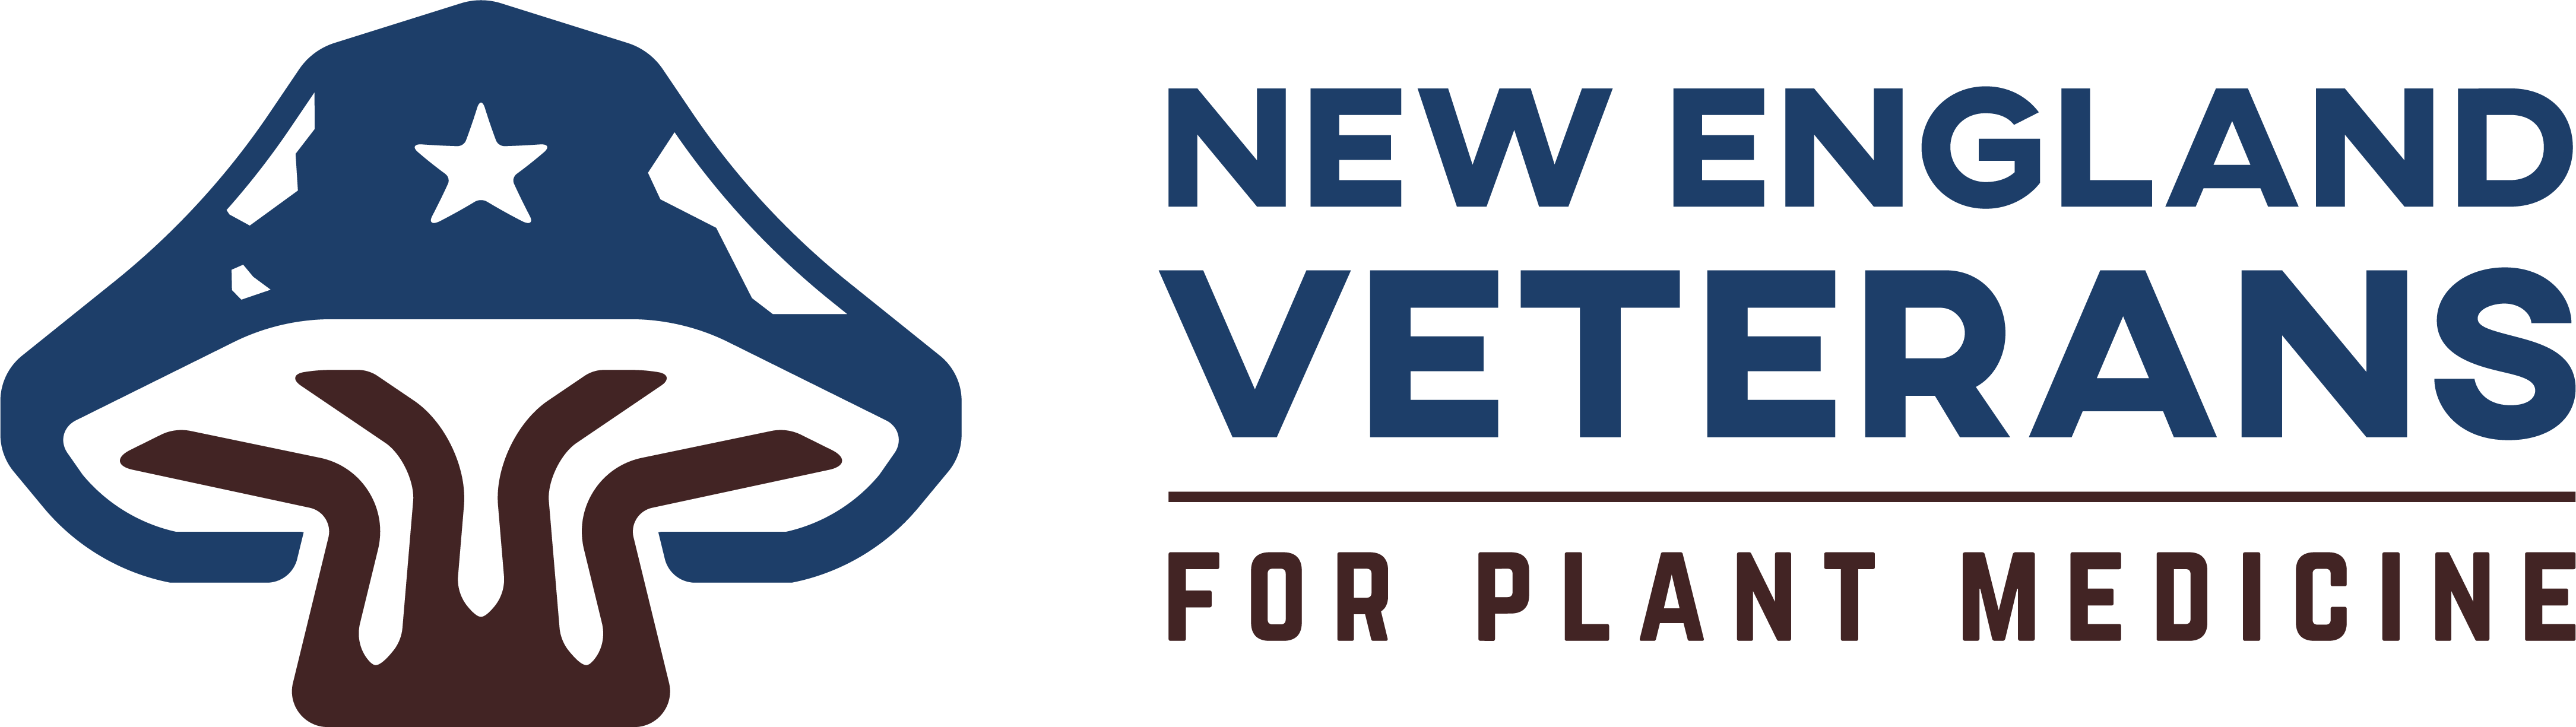 New England Veterans for Plant Medicine